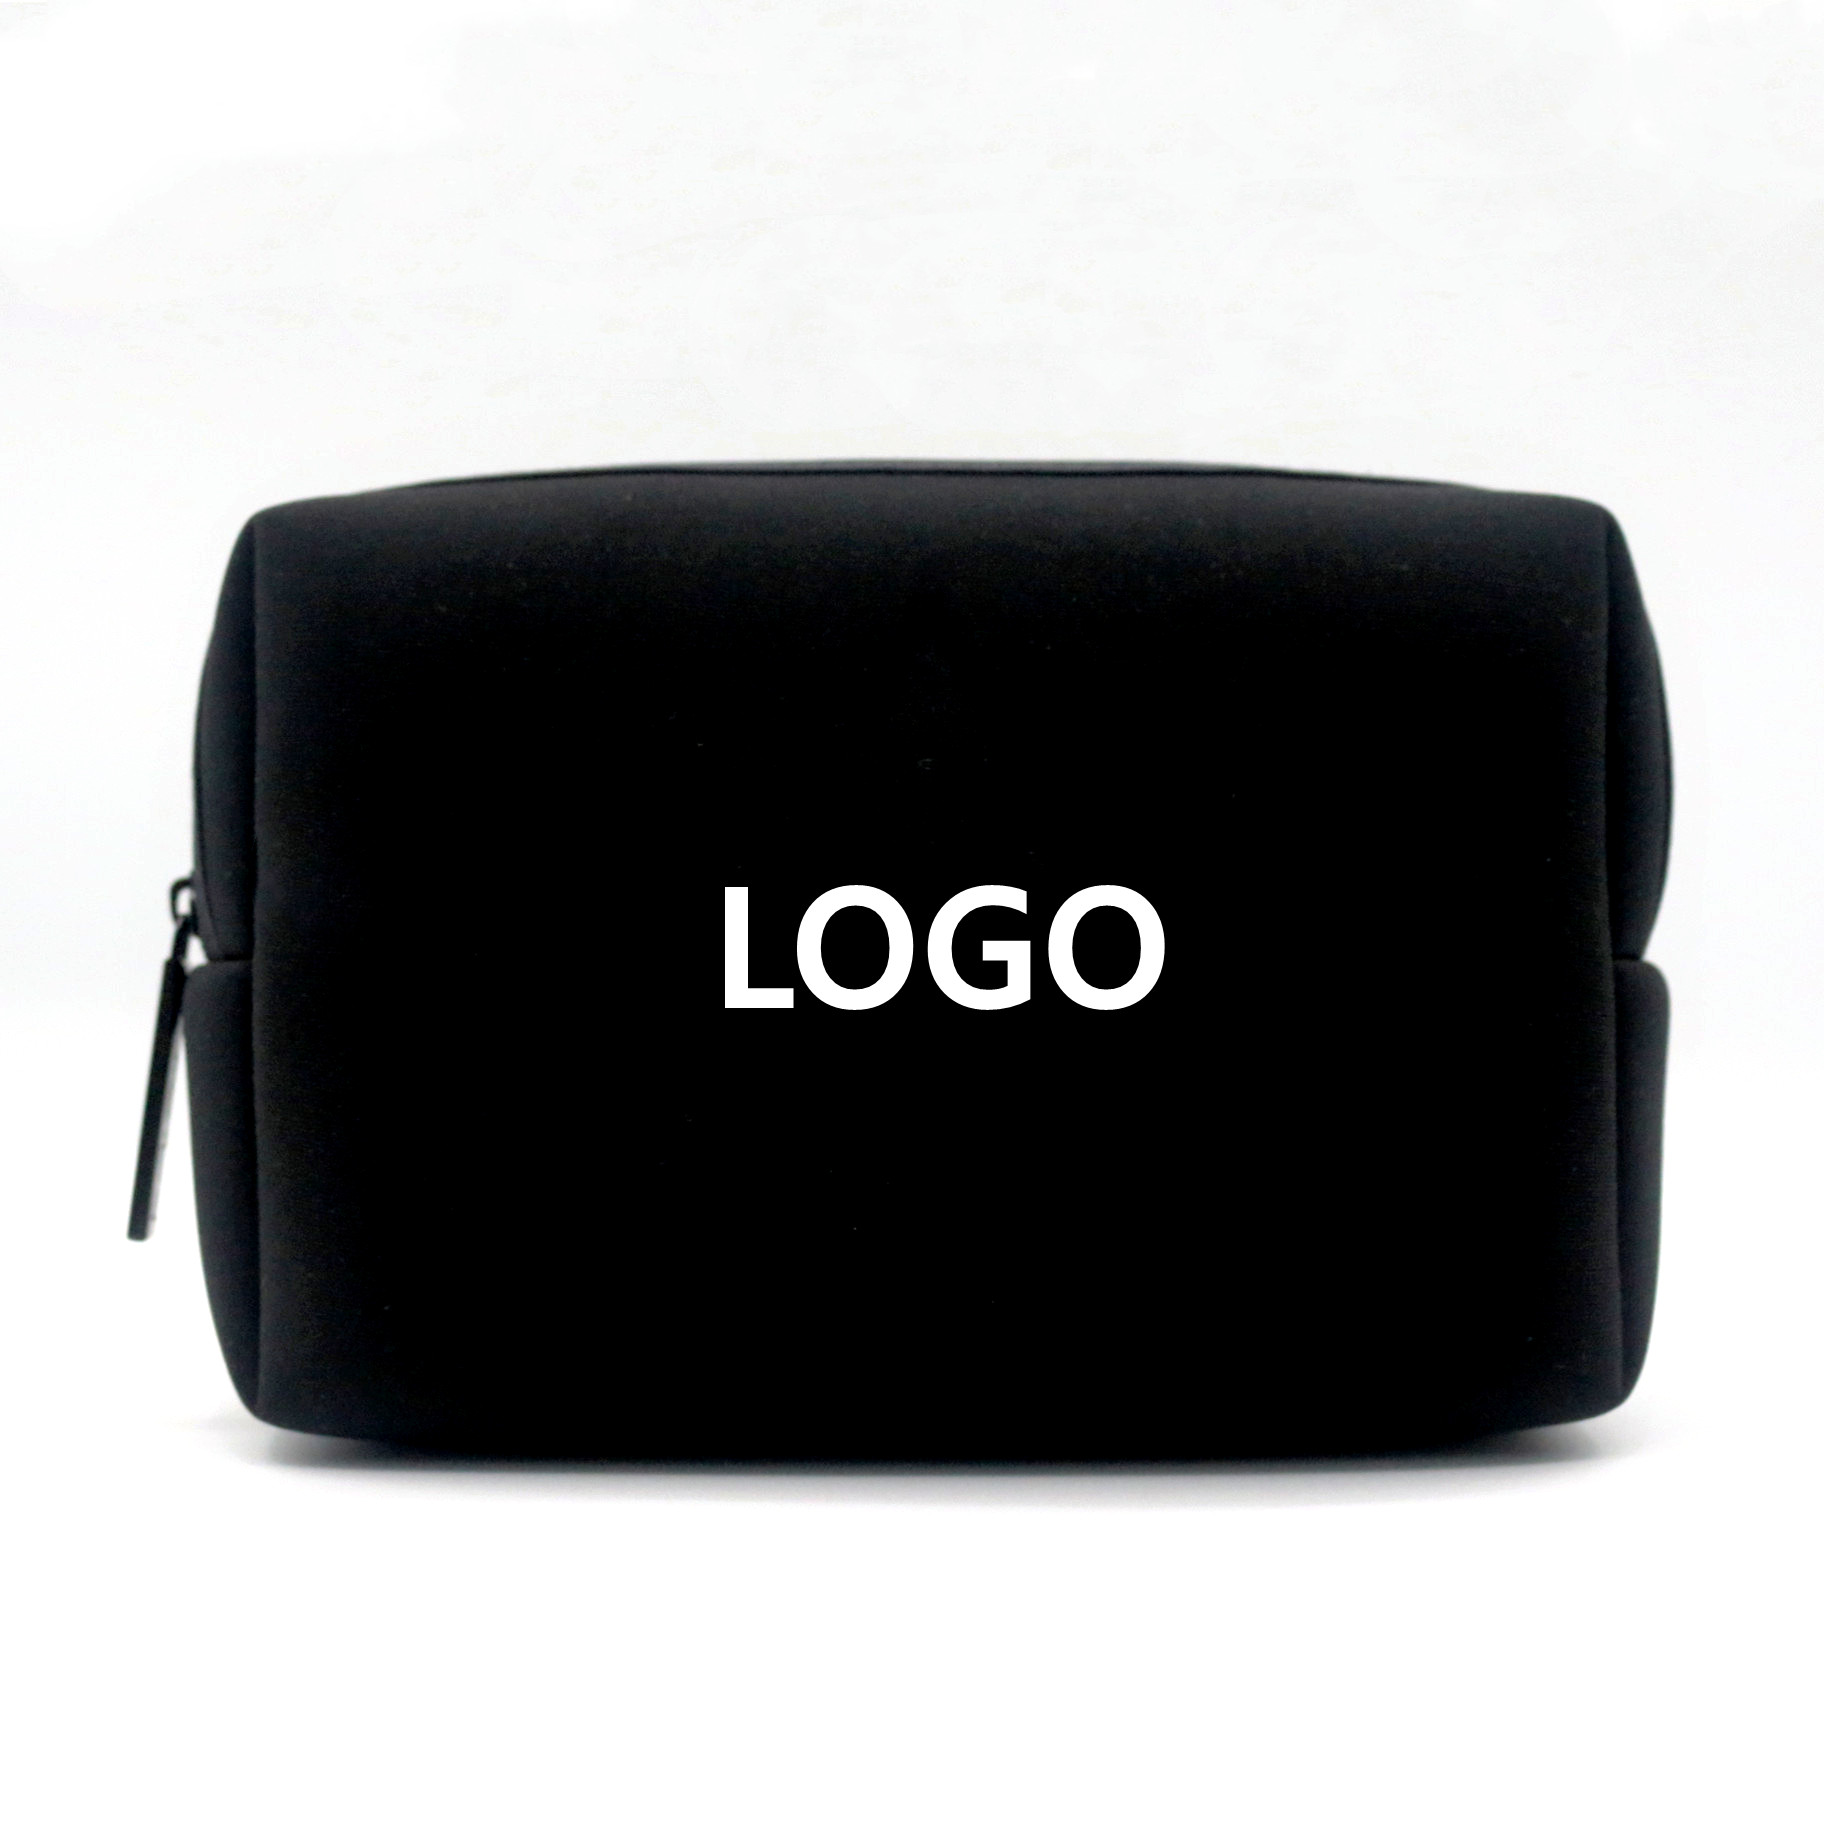 Sport Style New Design Quality Neoprene Fabric Men's Toiletry Wash Bag Daily Use Black Neoprene Waterproof Cosmetic Bag